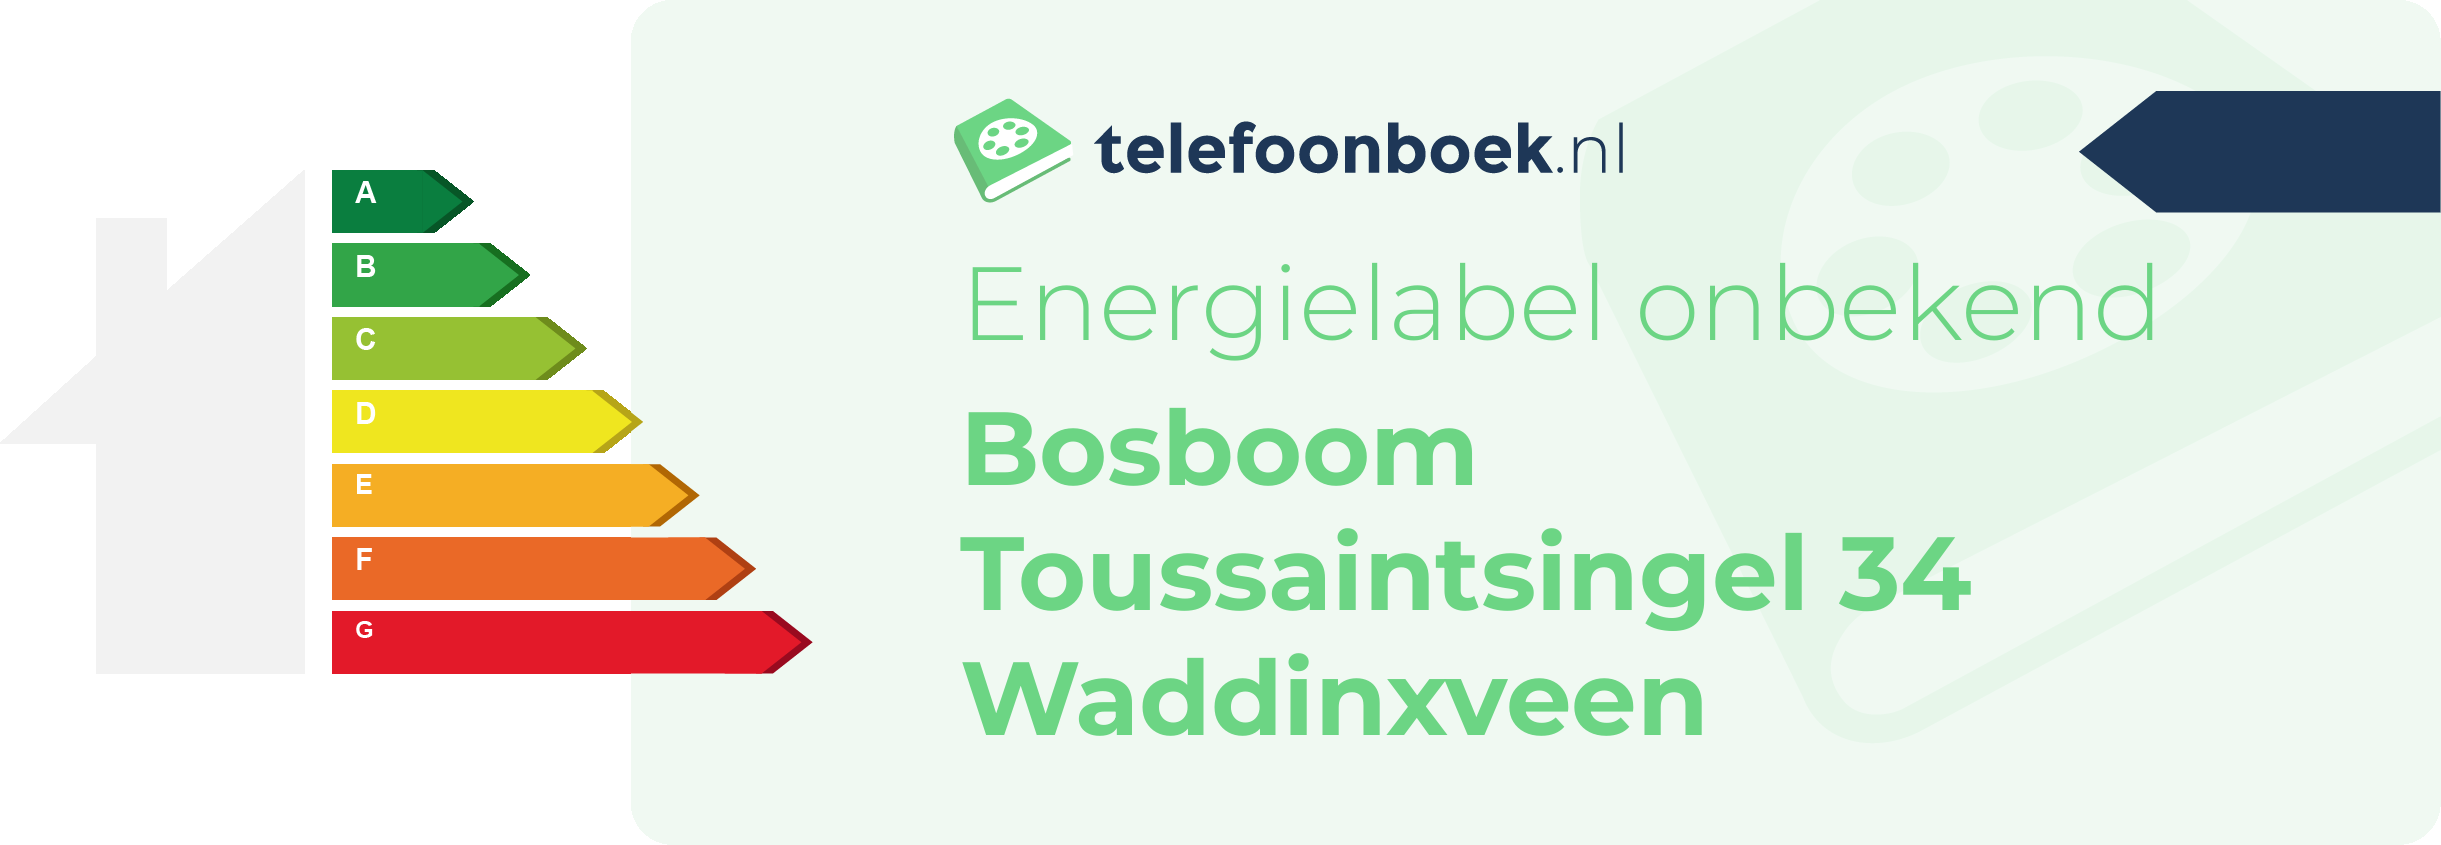 Energielabel Bosboom Toussaintsingel 34 Waddinxveen